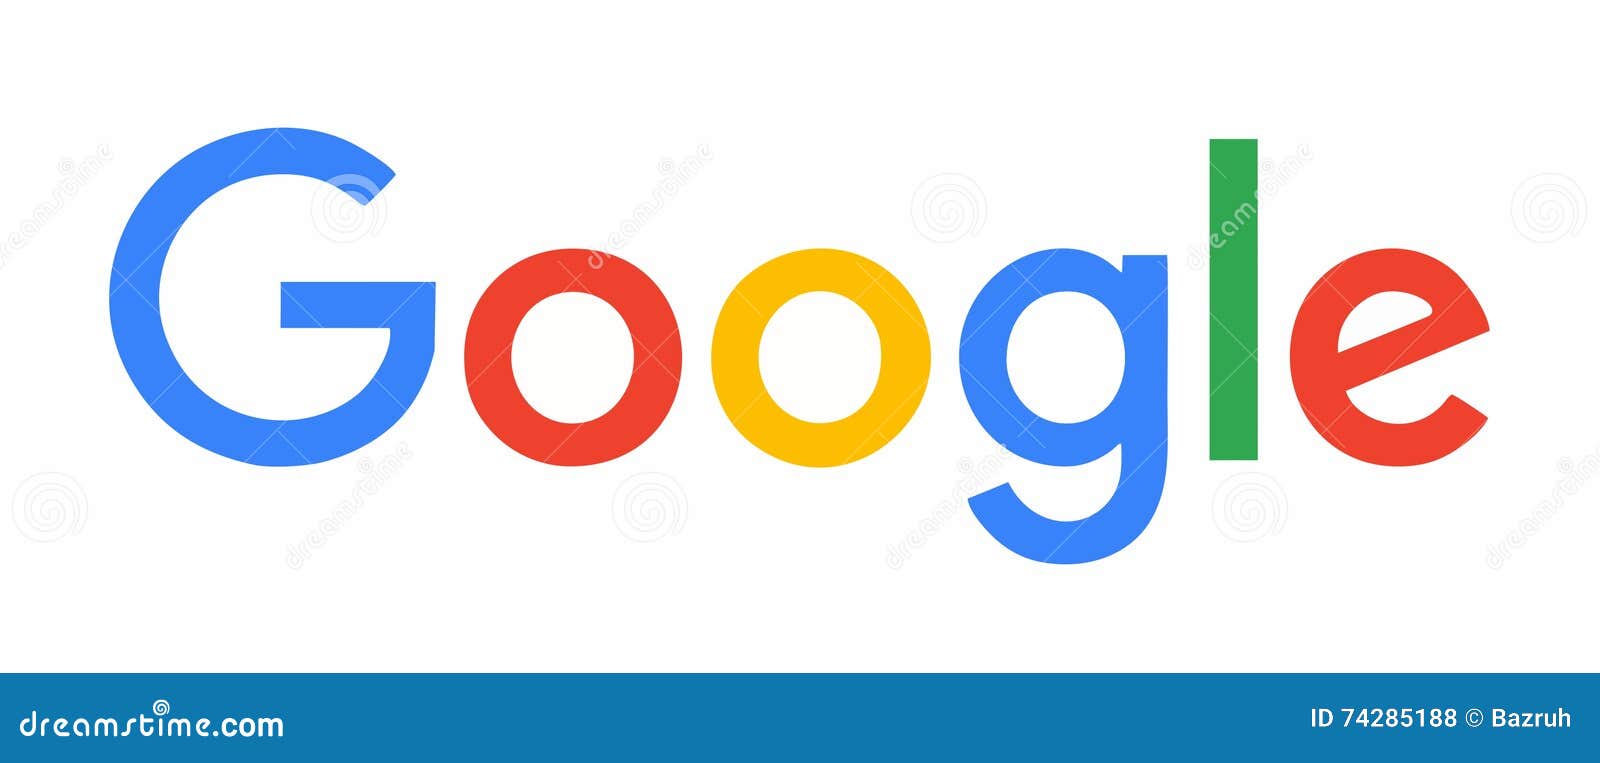 Google logo editorial stock photo. Illustration of electronic - 74285188